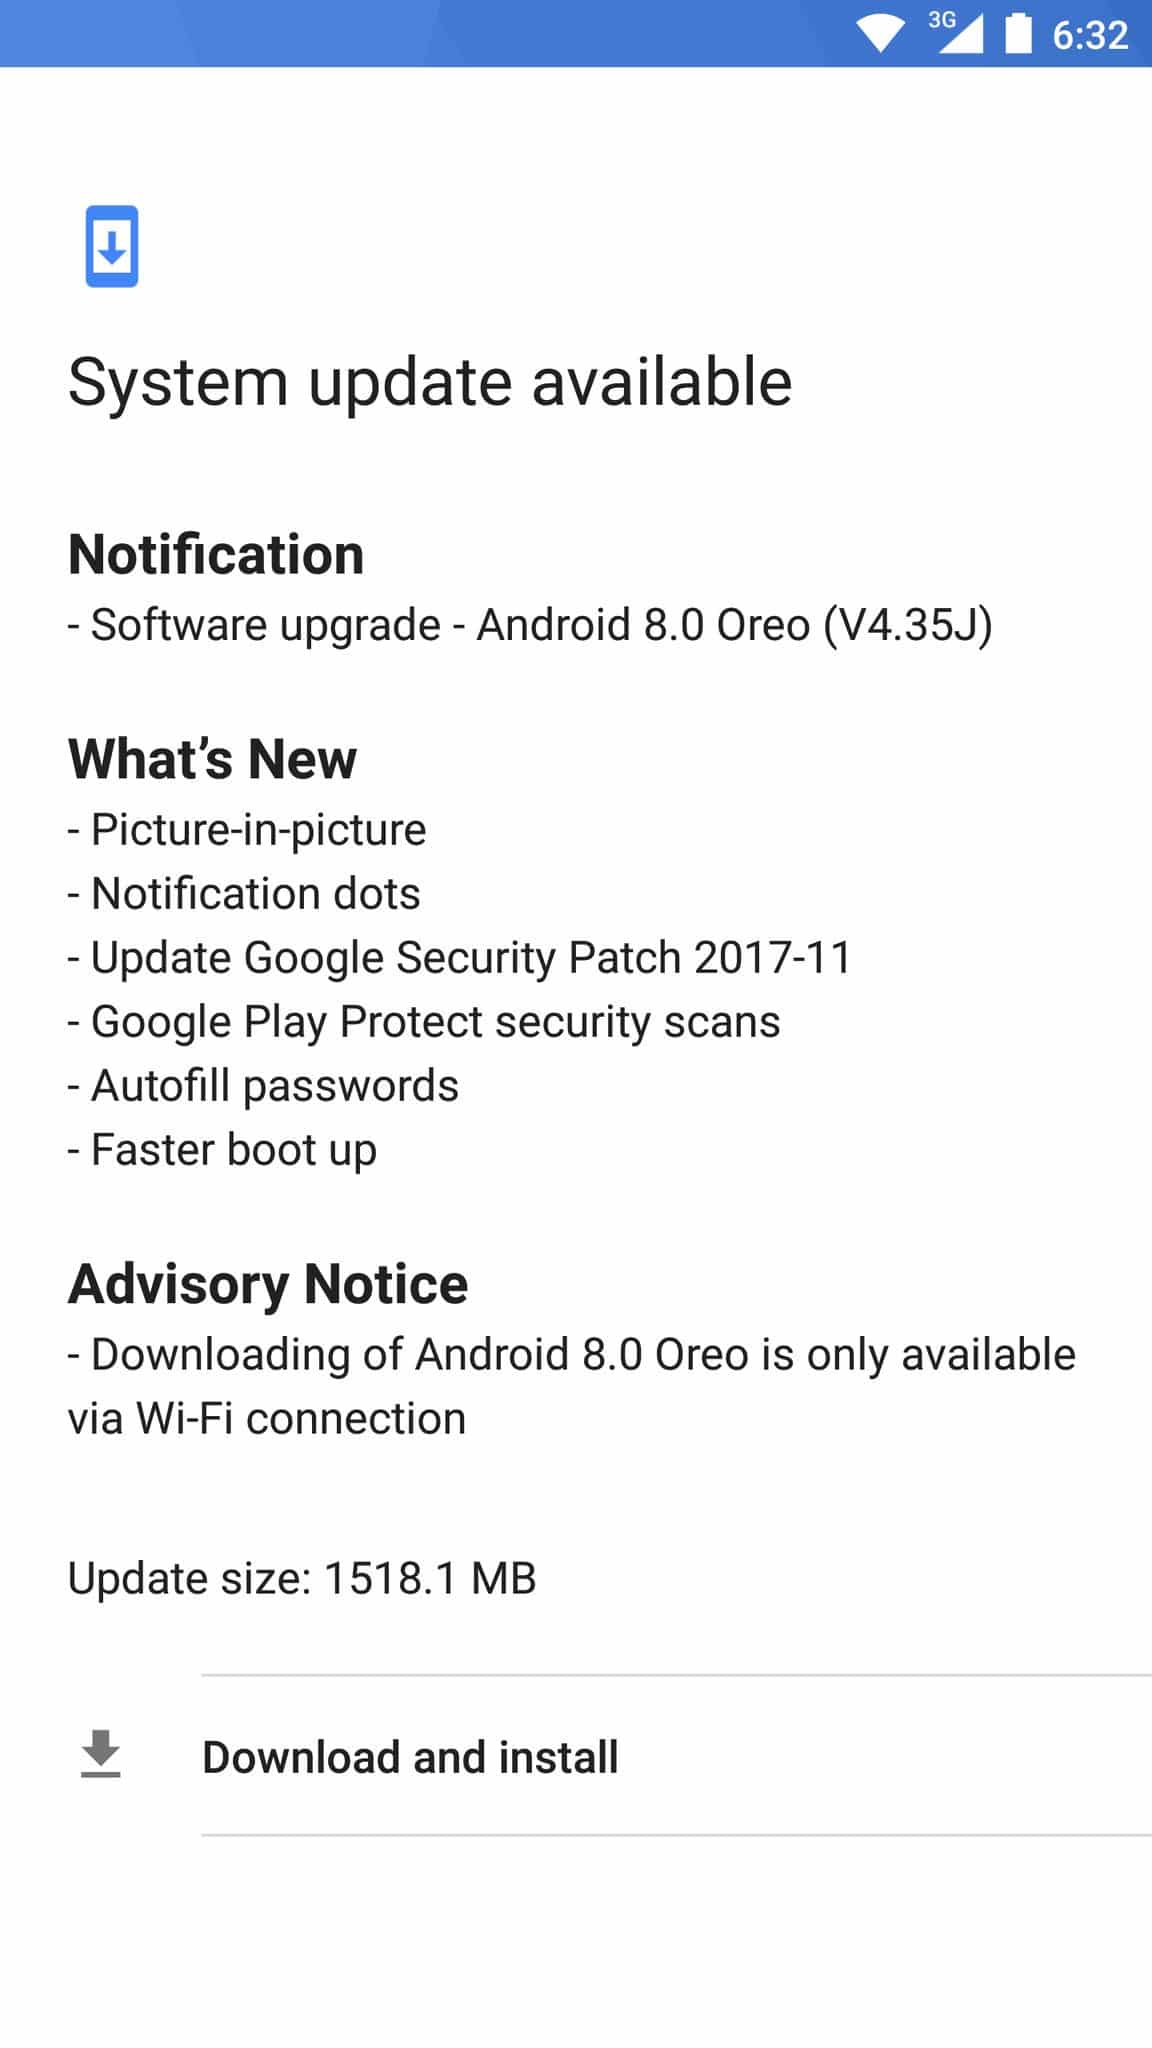 Nokia 8 Android 8.0 Oreo update notification